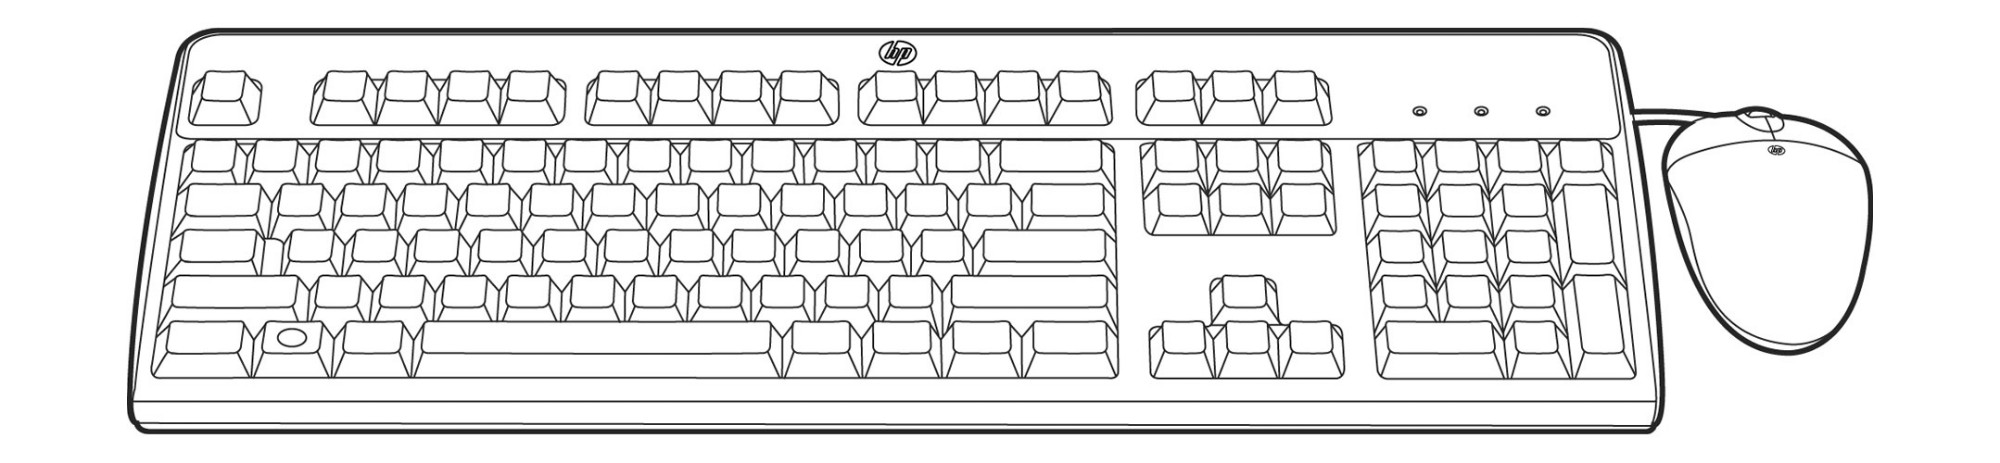 Hewlett Packard Enterprise 631348-B21 keyboard Mouse included USB QWERTY Spanish Black